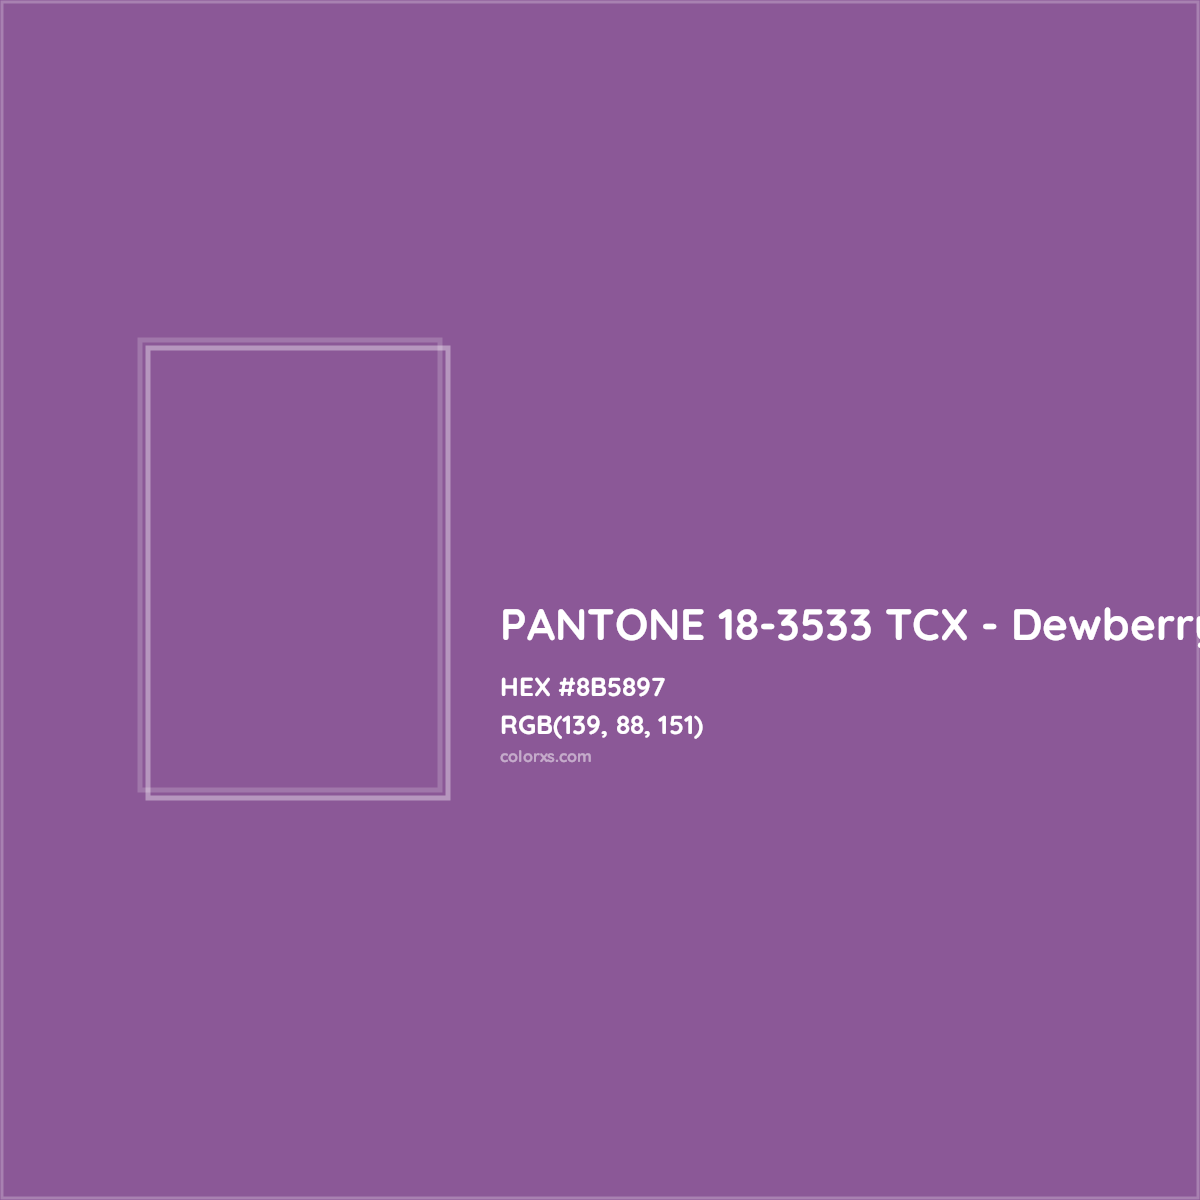 HEX #8B5897 PANTONE 18-3533 TCX - Dewberry CMS Pantone TCX - Color Code